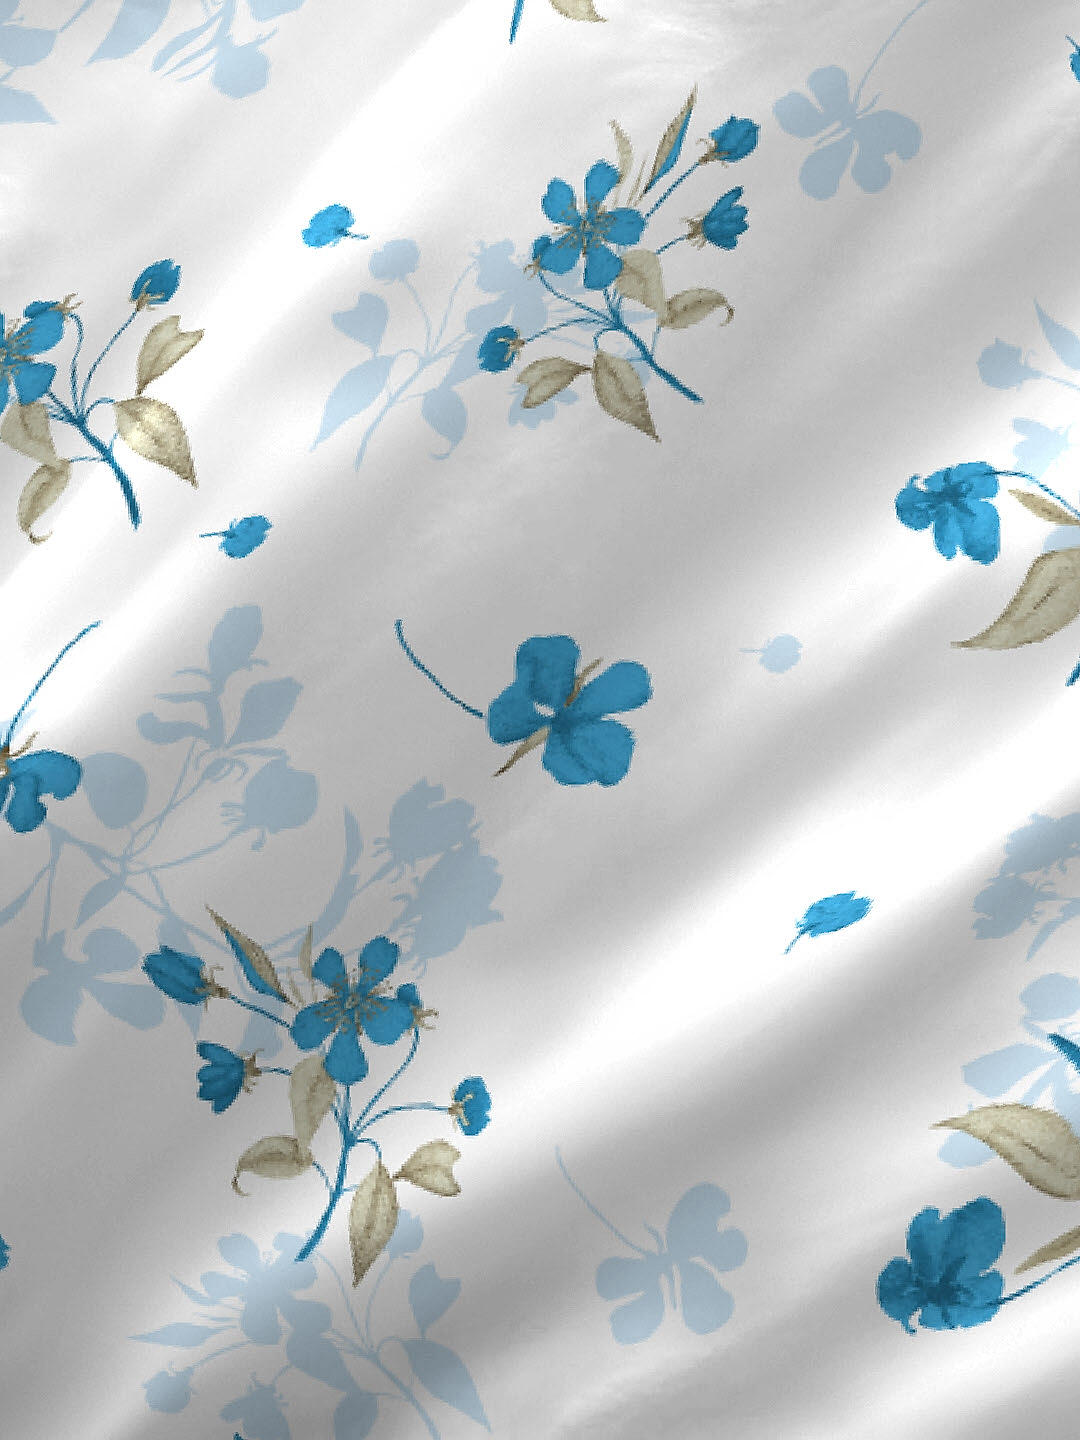 Iris Gaze-1 100% cotton Fine White/Blue Colored Floral Print King Bed Sheet Set